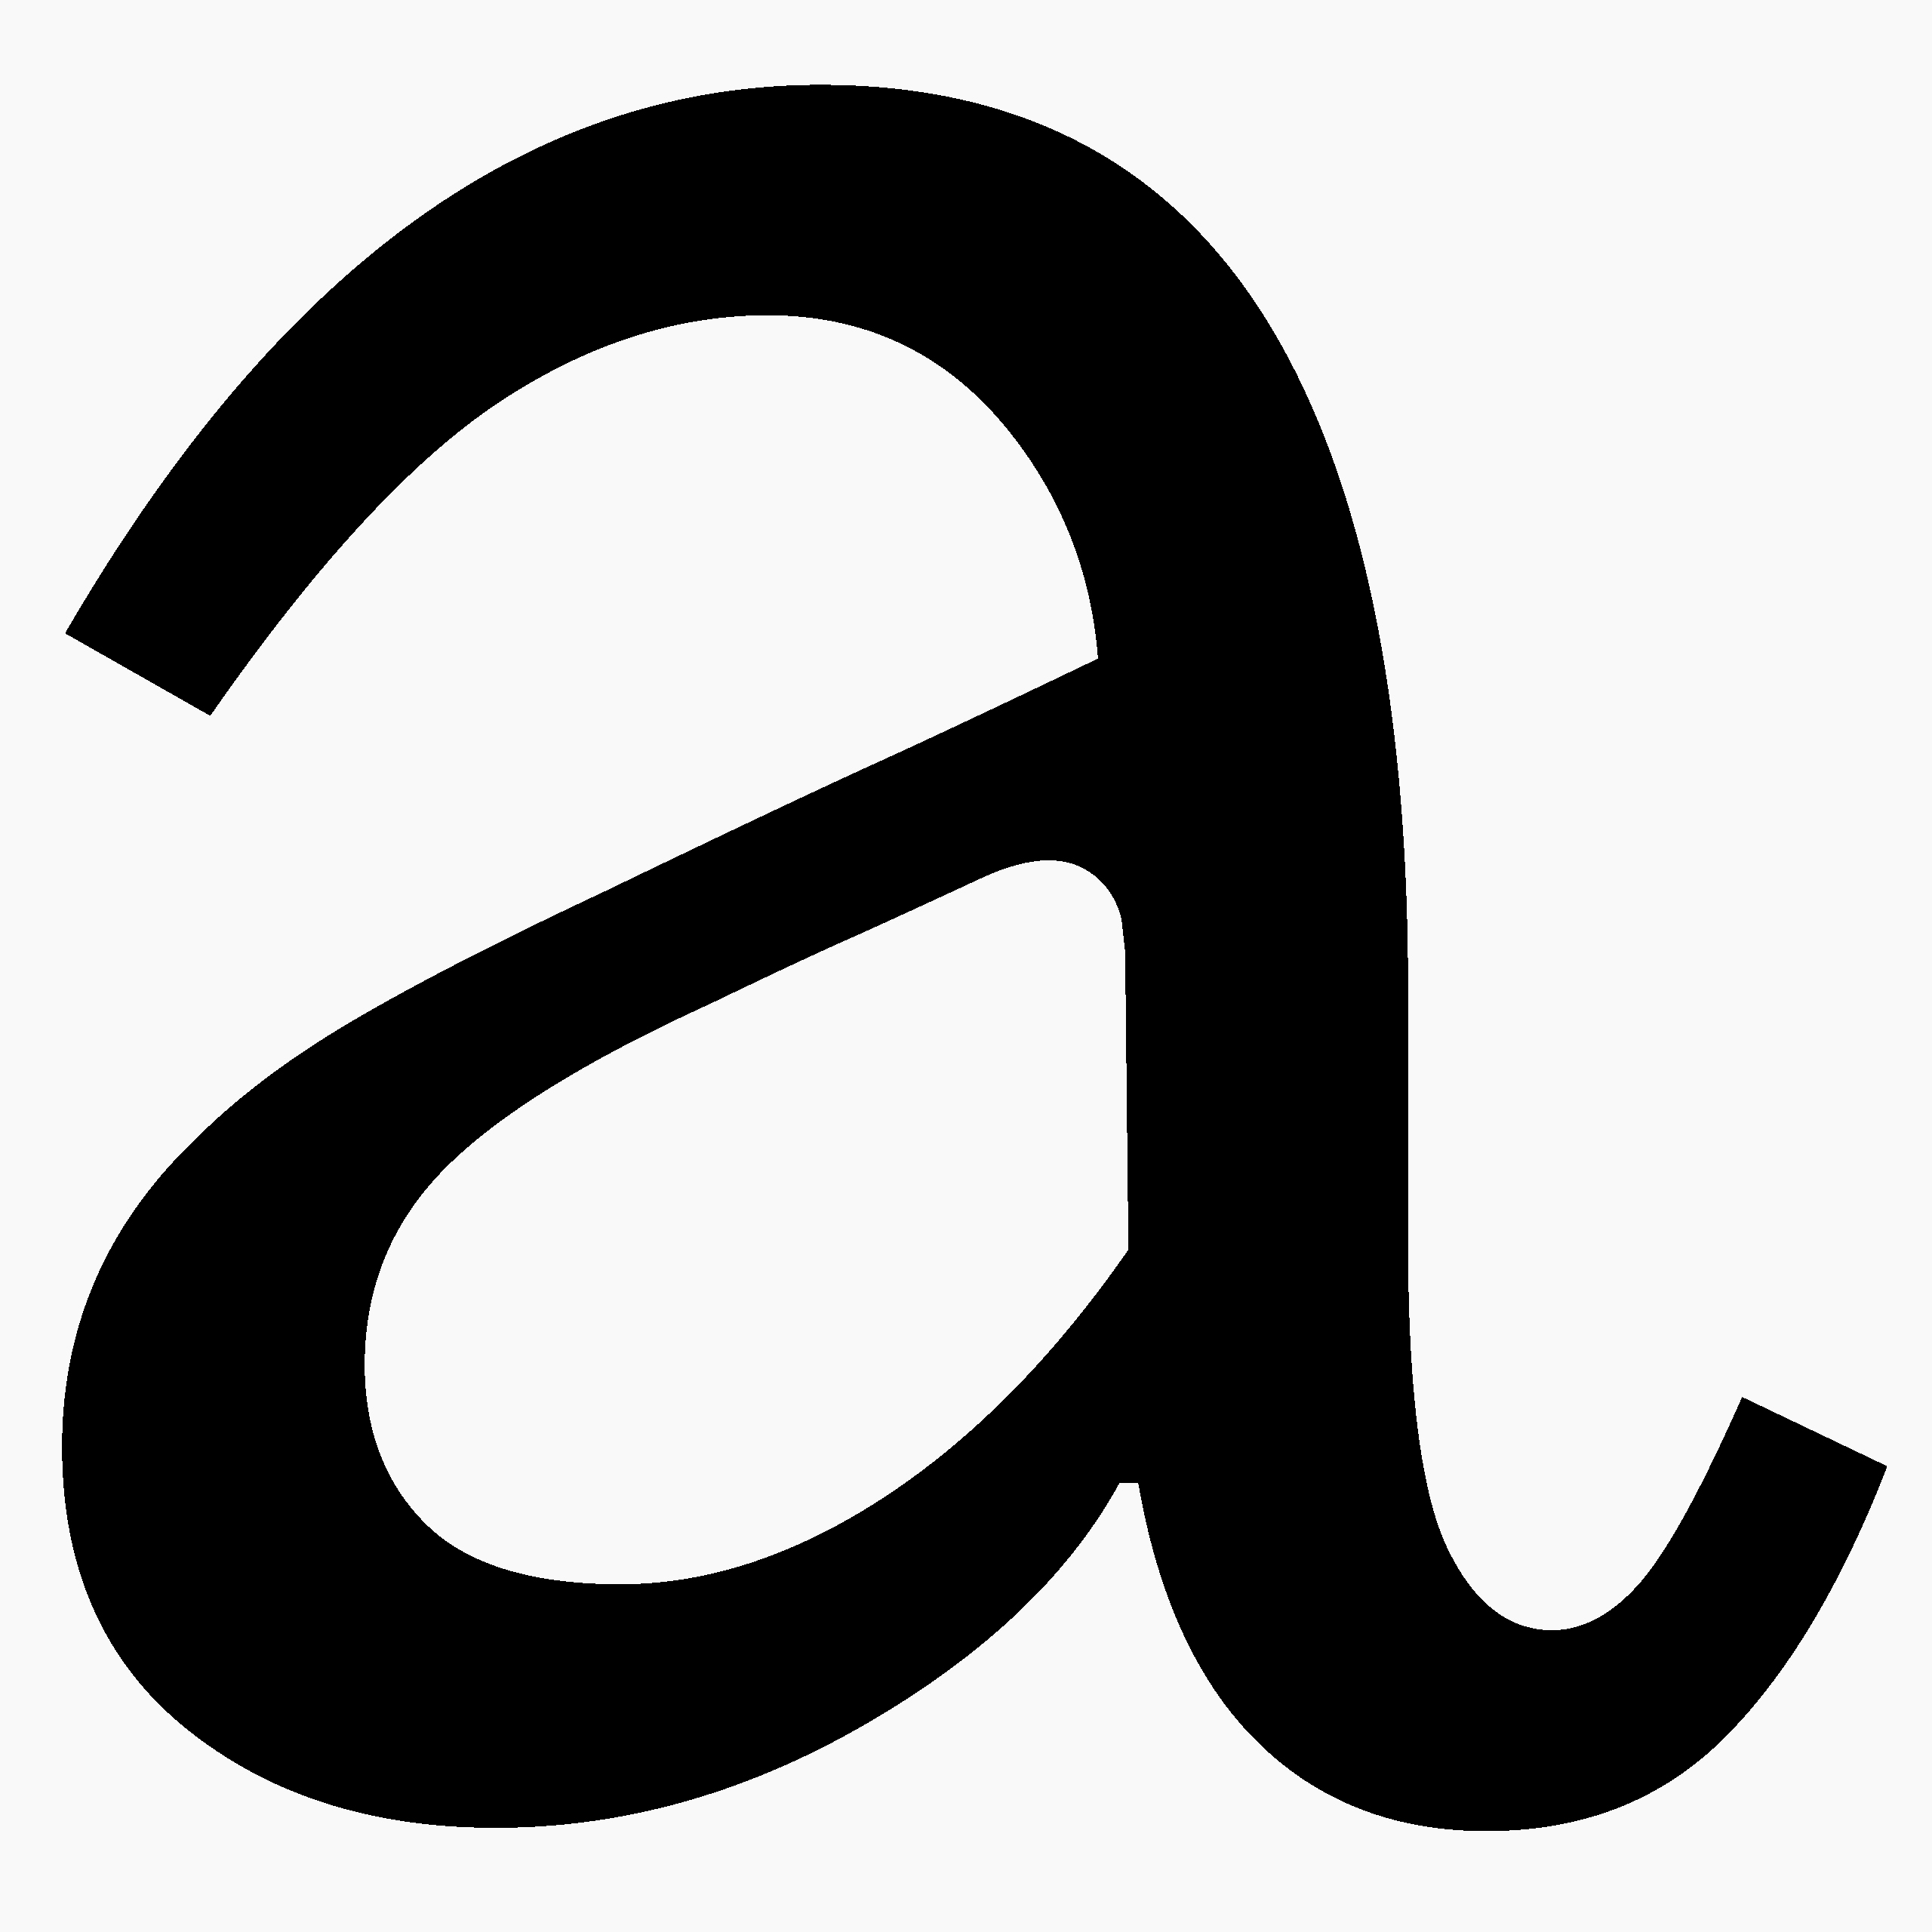 Daniel-Stuhlpfarrer_typedesign_graphicdesign_custom-font_custom-typeface_typography_Ju-Schnee-interdisciplinary-artist_03